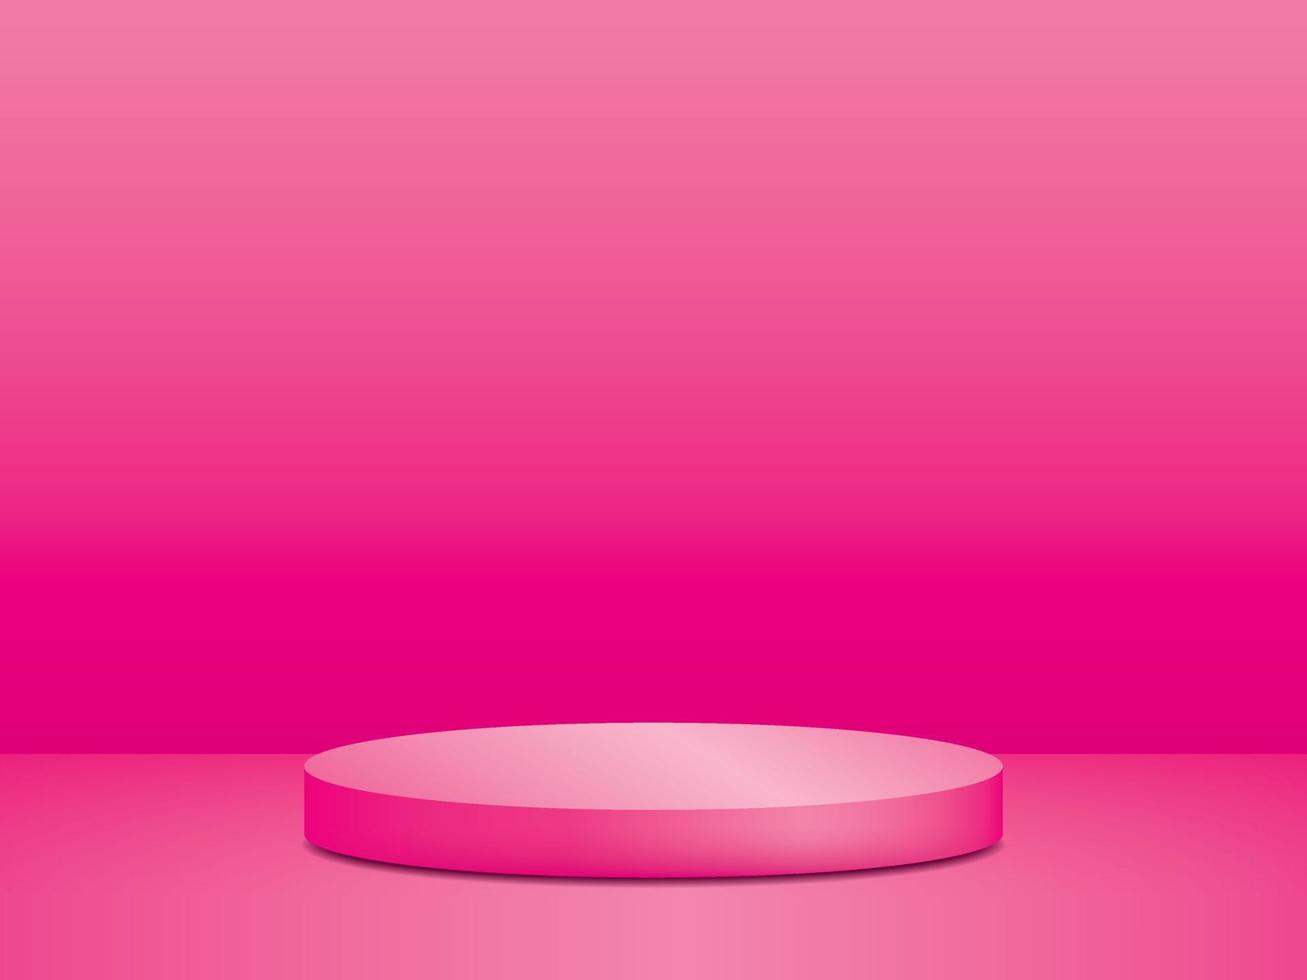 pink step podium 3D illustration vector. vector